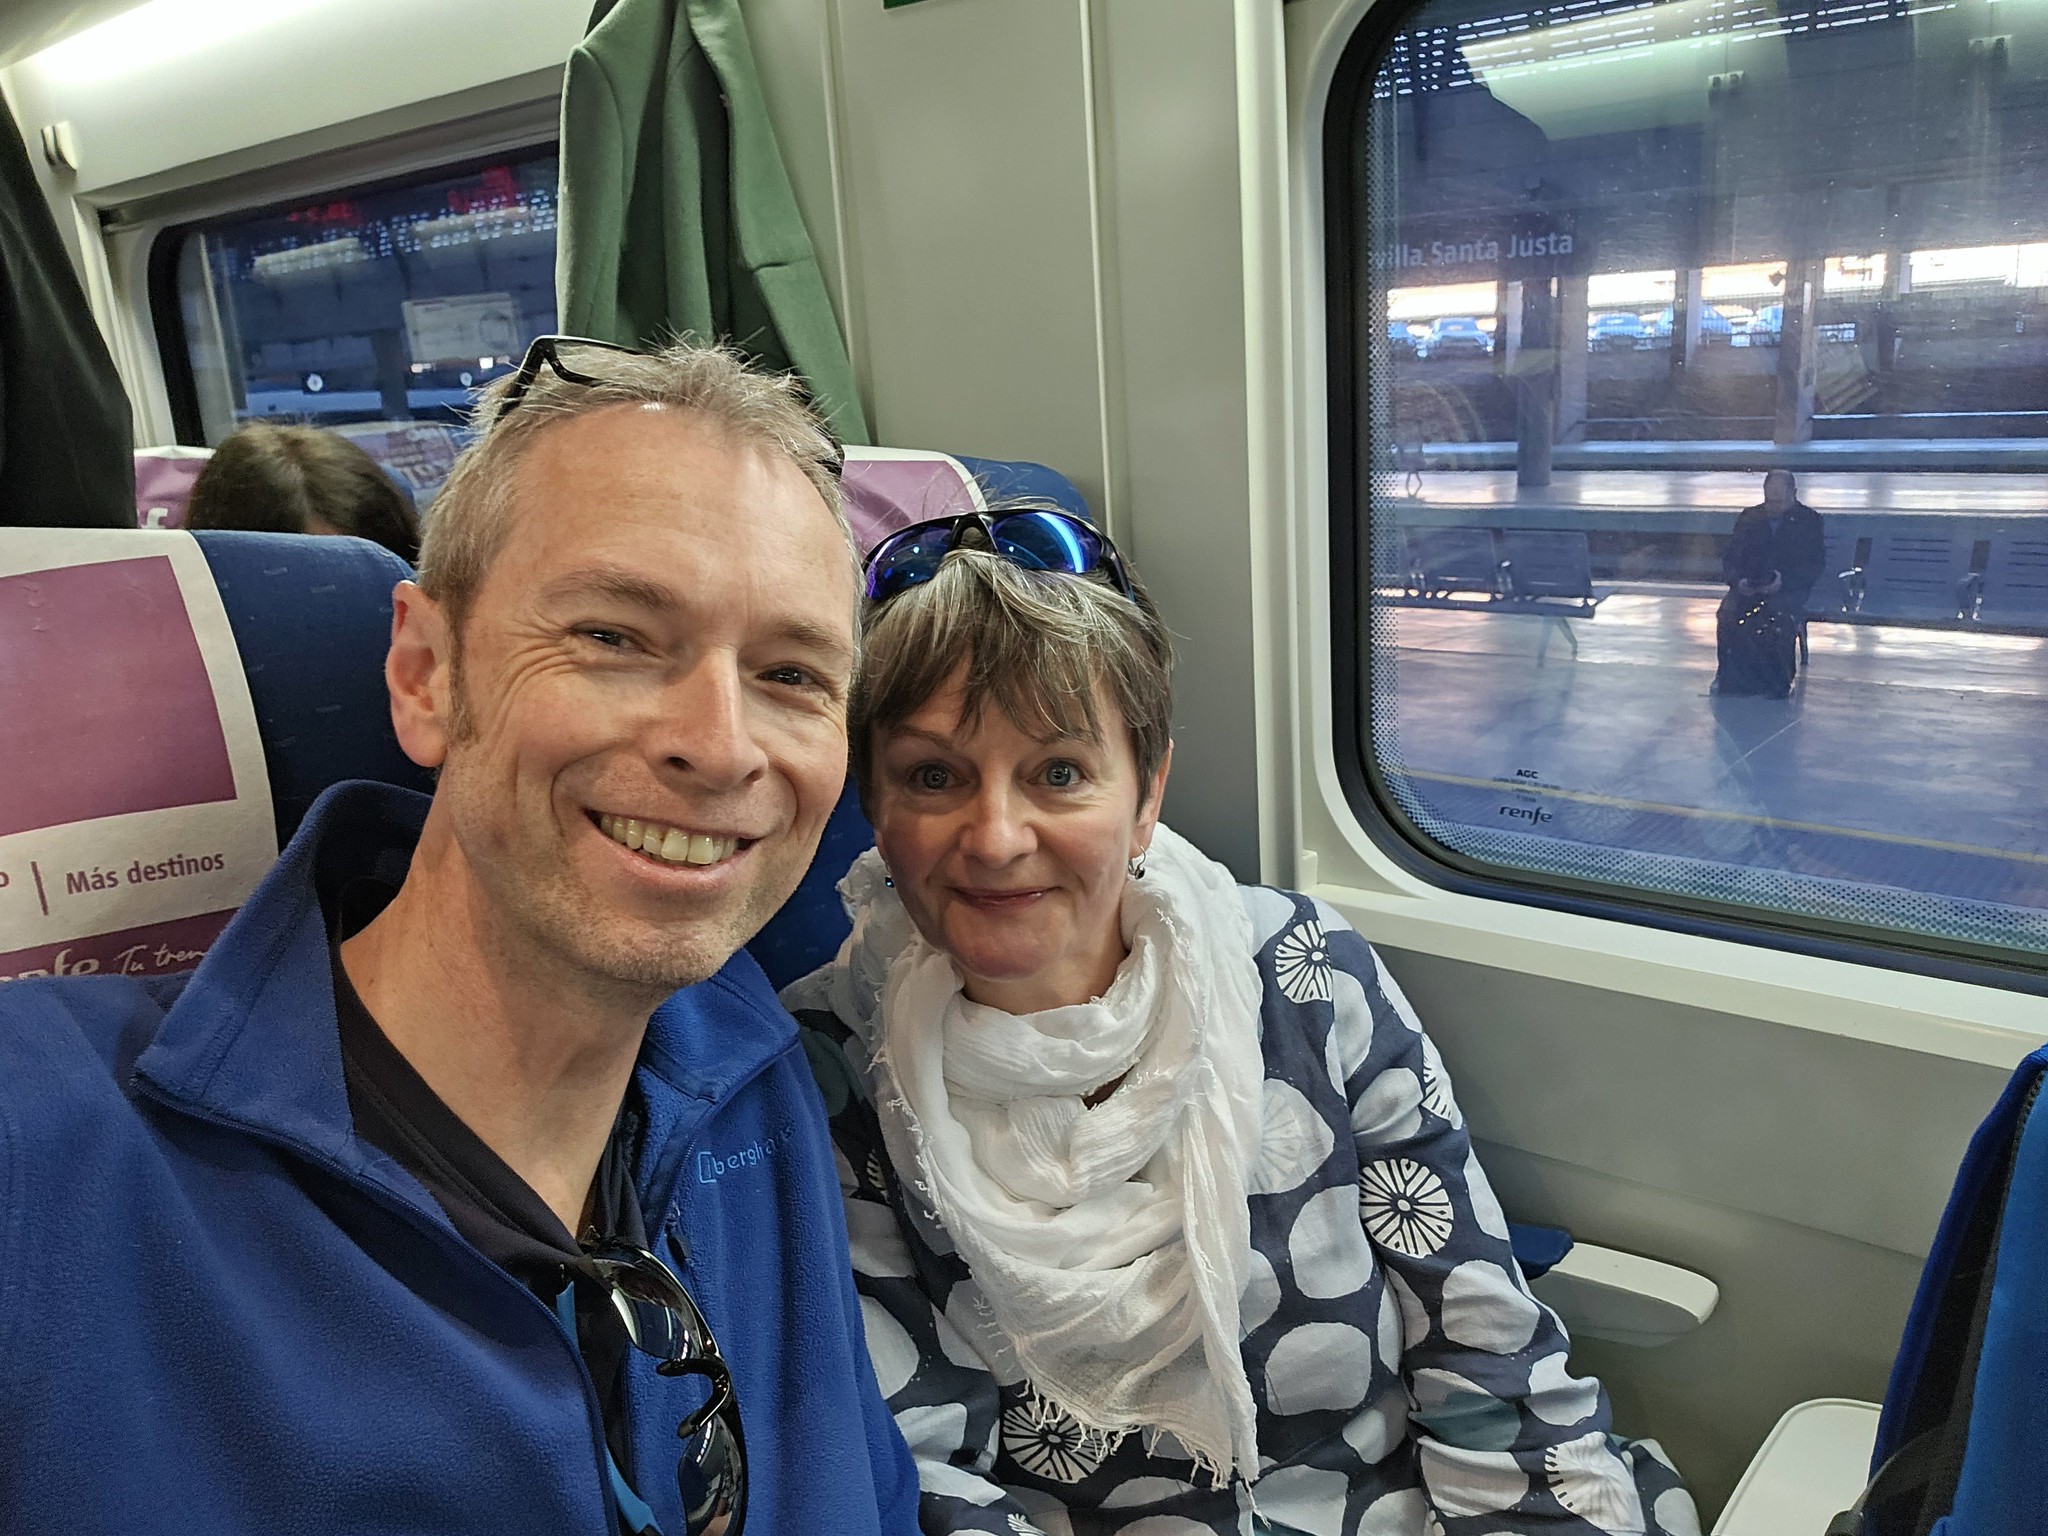 The Billinghams on the train to Cordoba